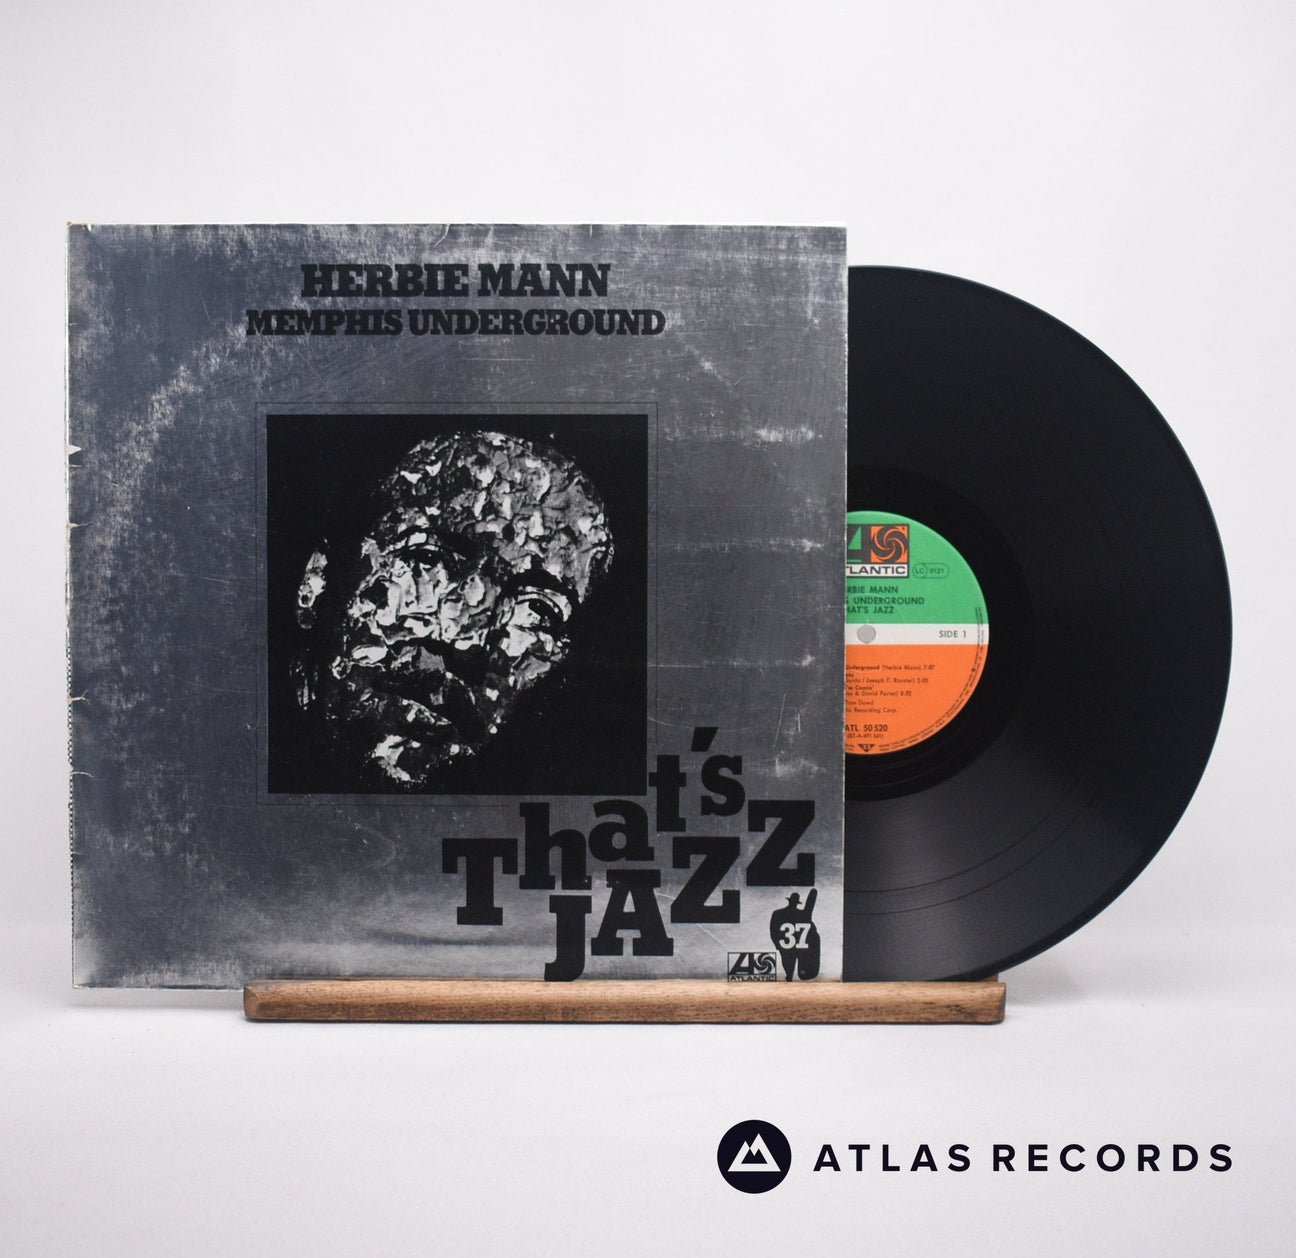 Herbie Mann Memphis Underground LP Vinyl Record - Front Cover & Record